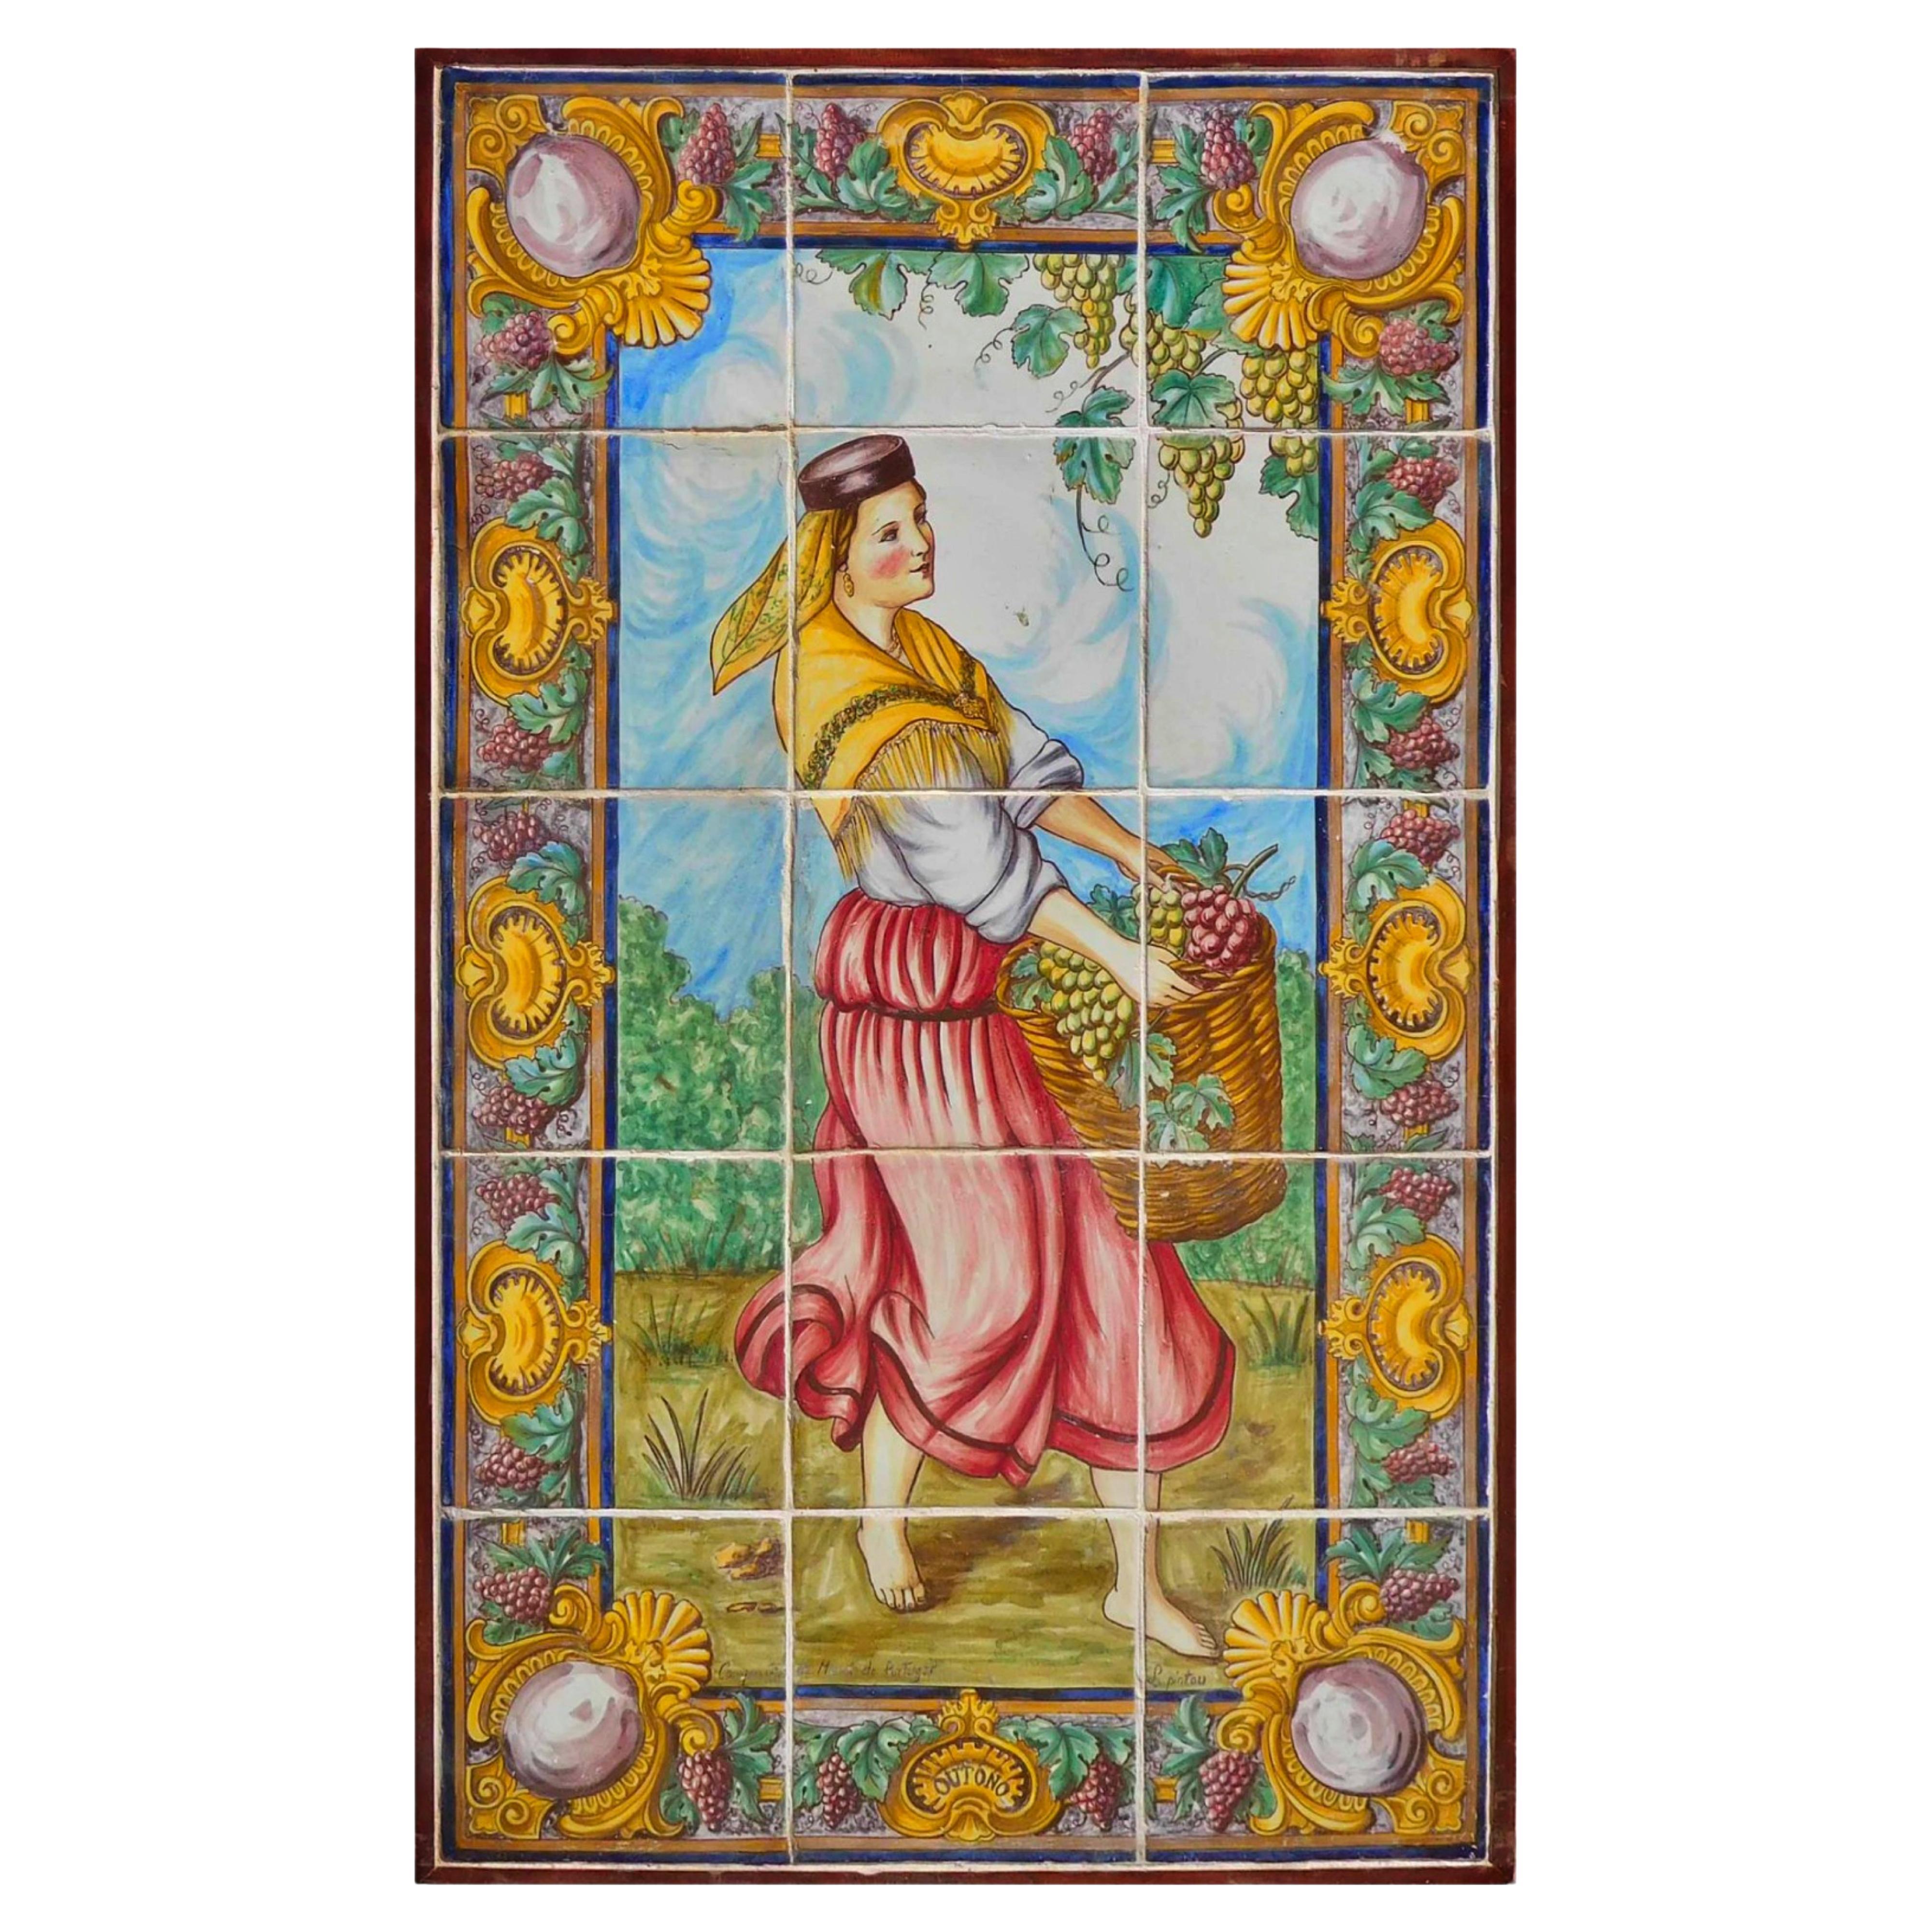 19th century Portuguese Tiles Panel "Summer" For Sale